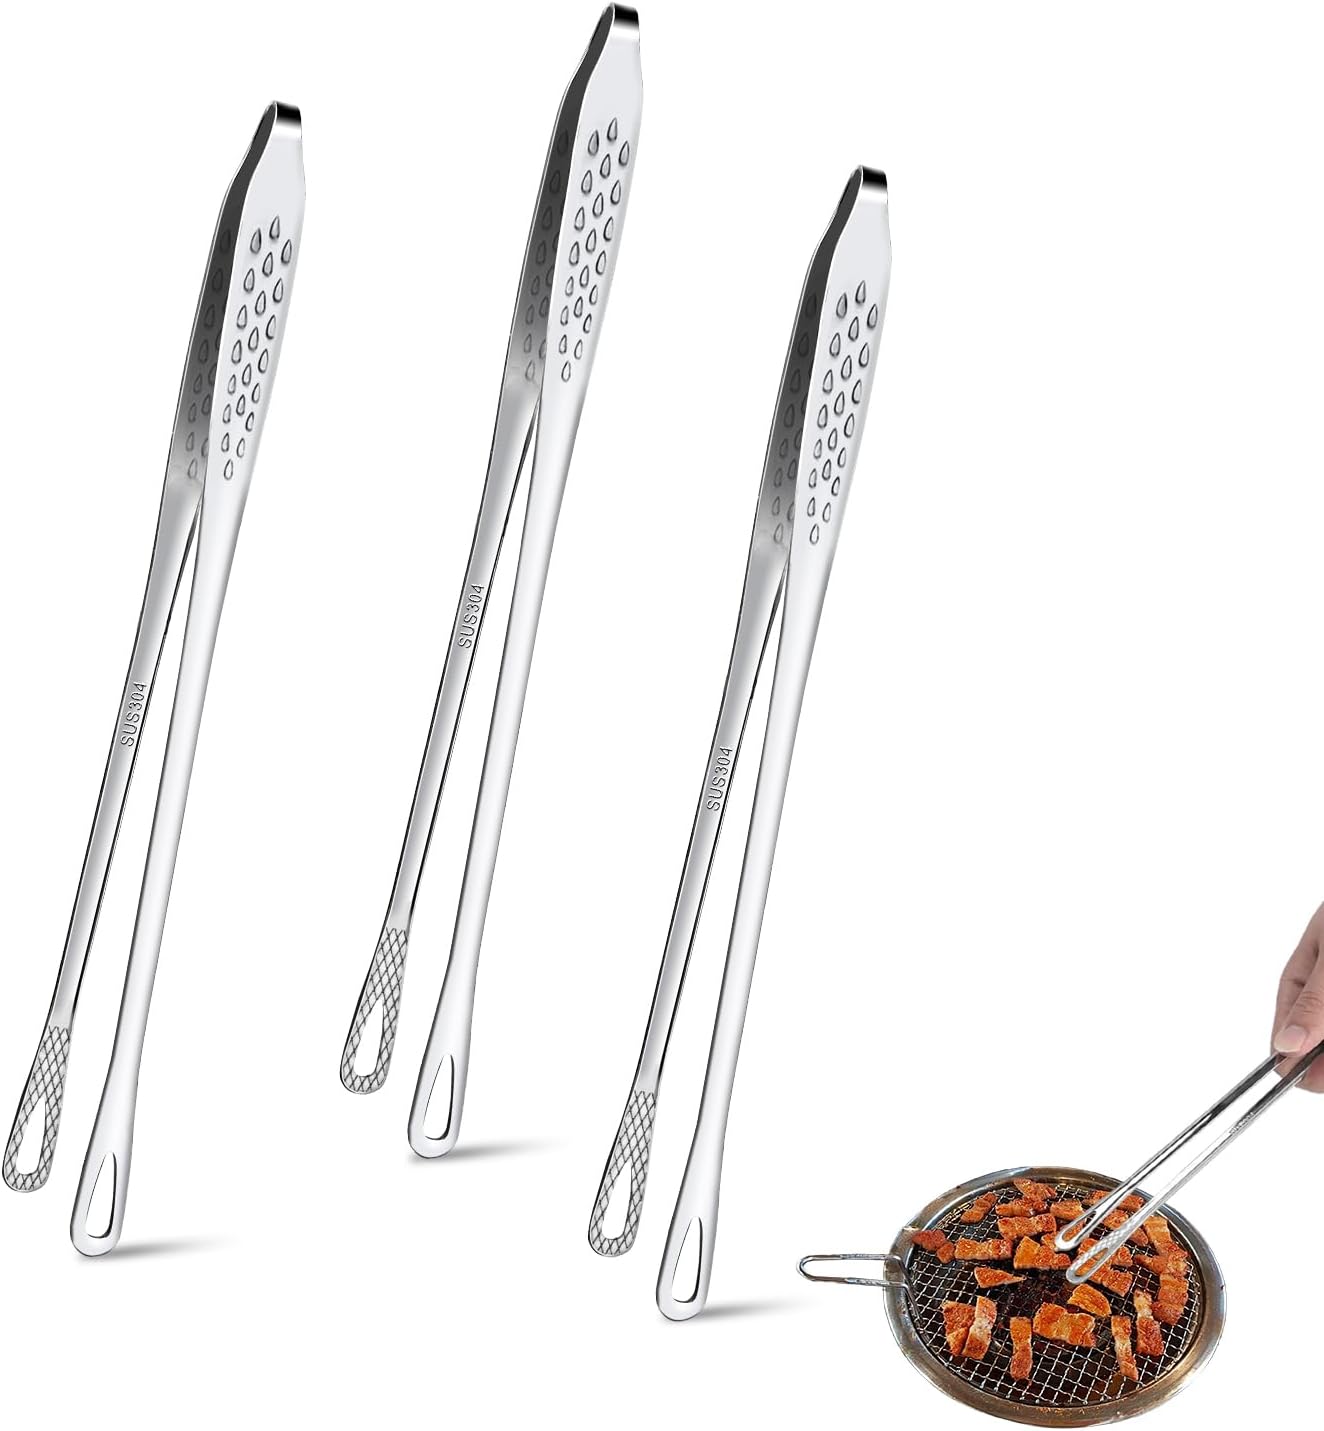 11-Inch 18/8 Stainless Steel Japanese Korean Grill Tongs - Kitchen Cooking Tweezer Tongs Set of 3